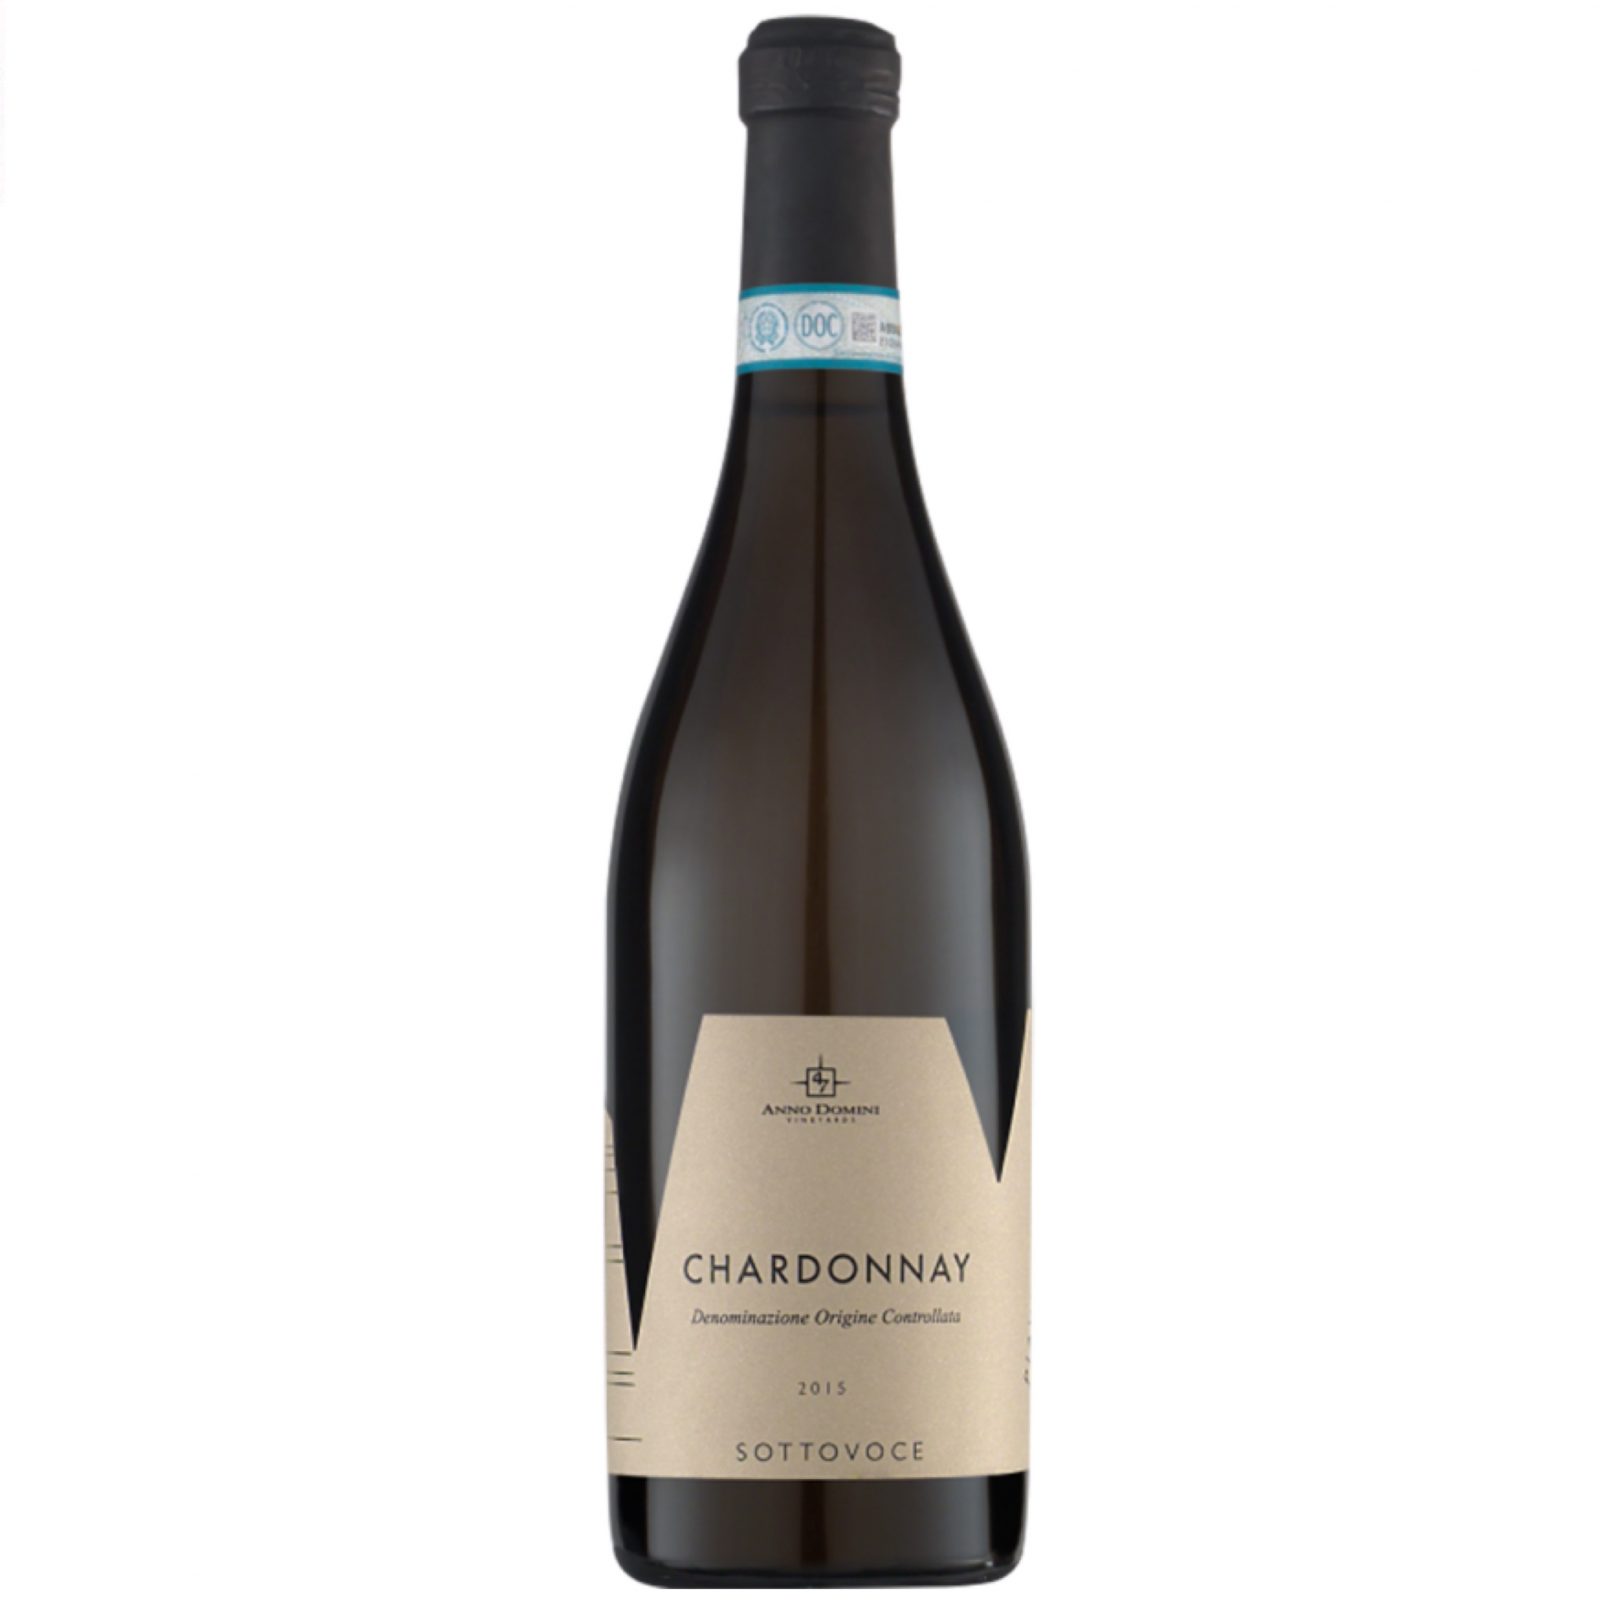 47-Anno-Domini-Chardonnay-Sottovoce-wijn-van-ons